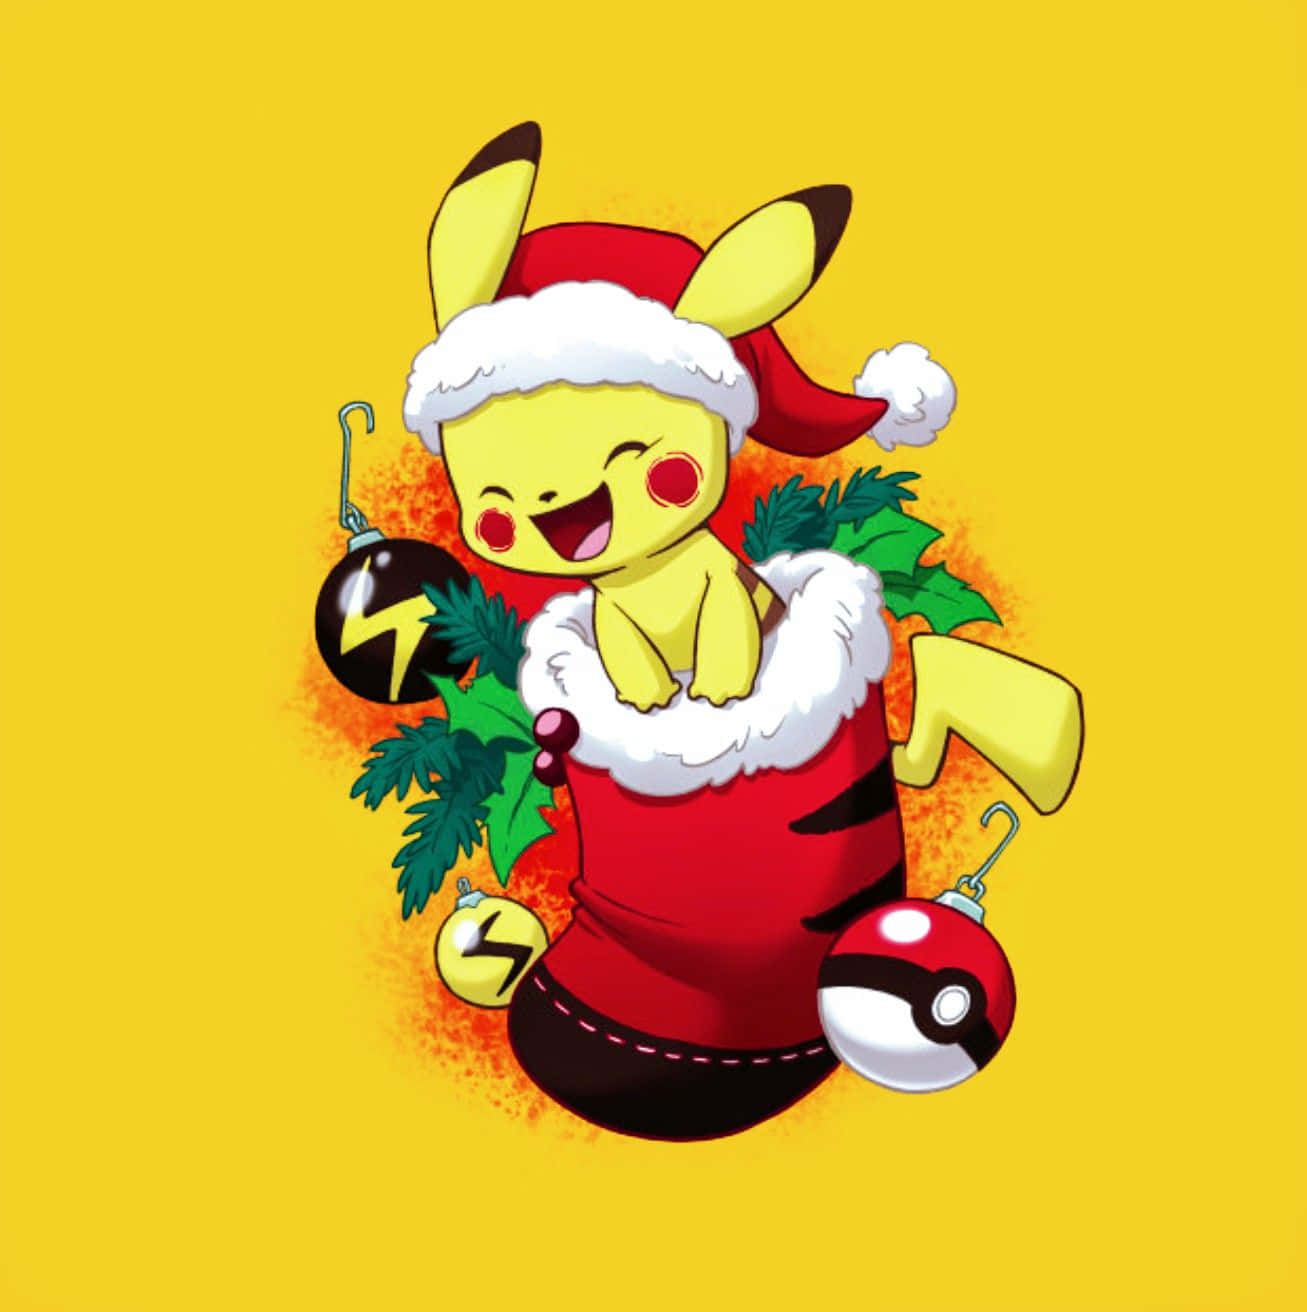 Christmas Pokemon wallpaper in 1920x1080 resolution